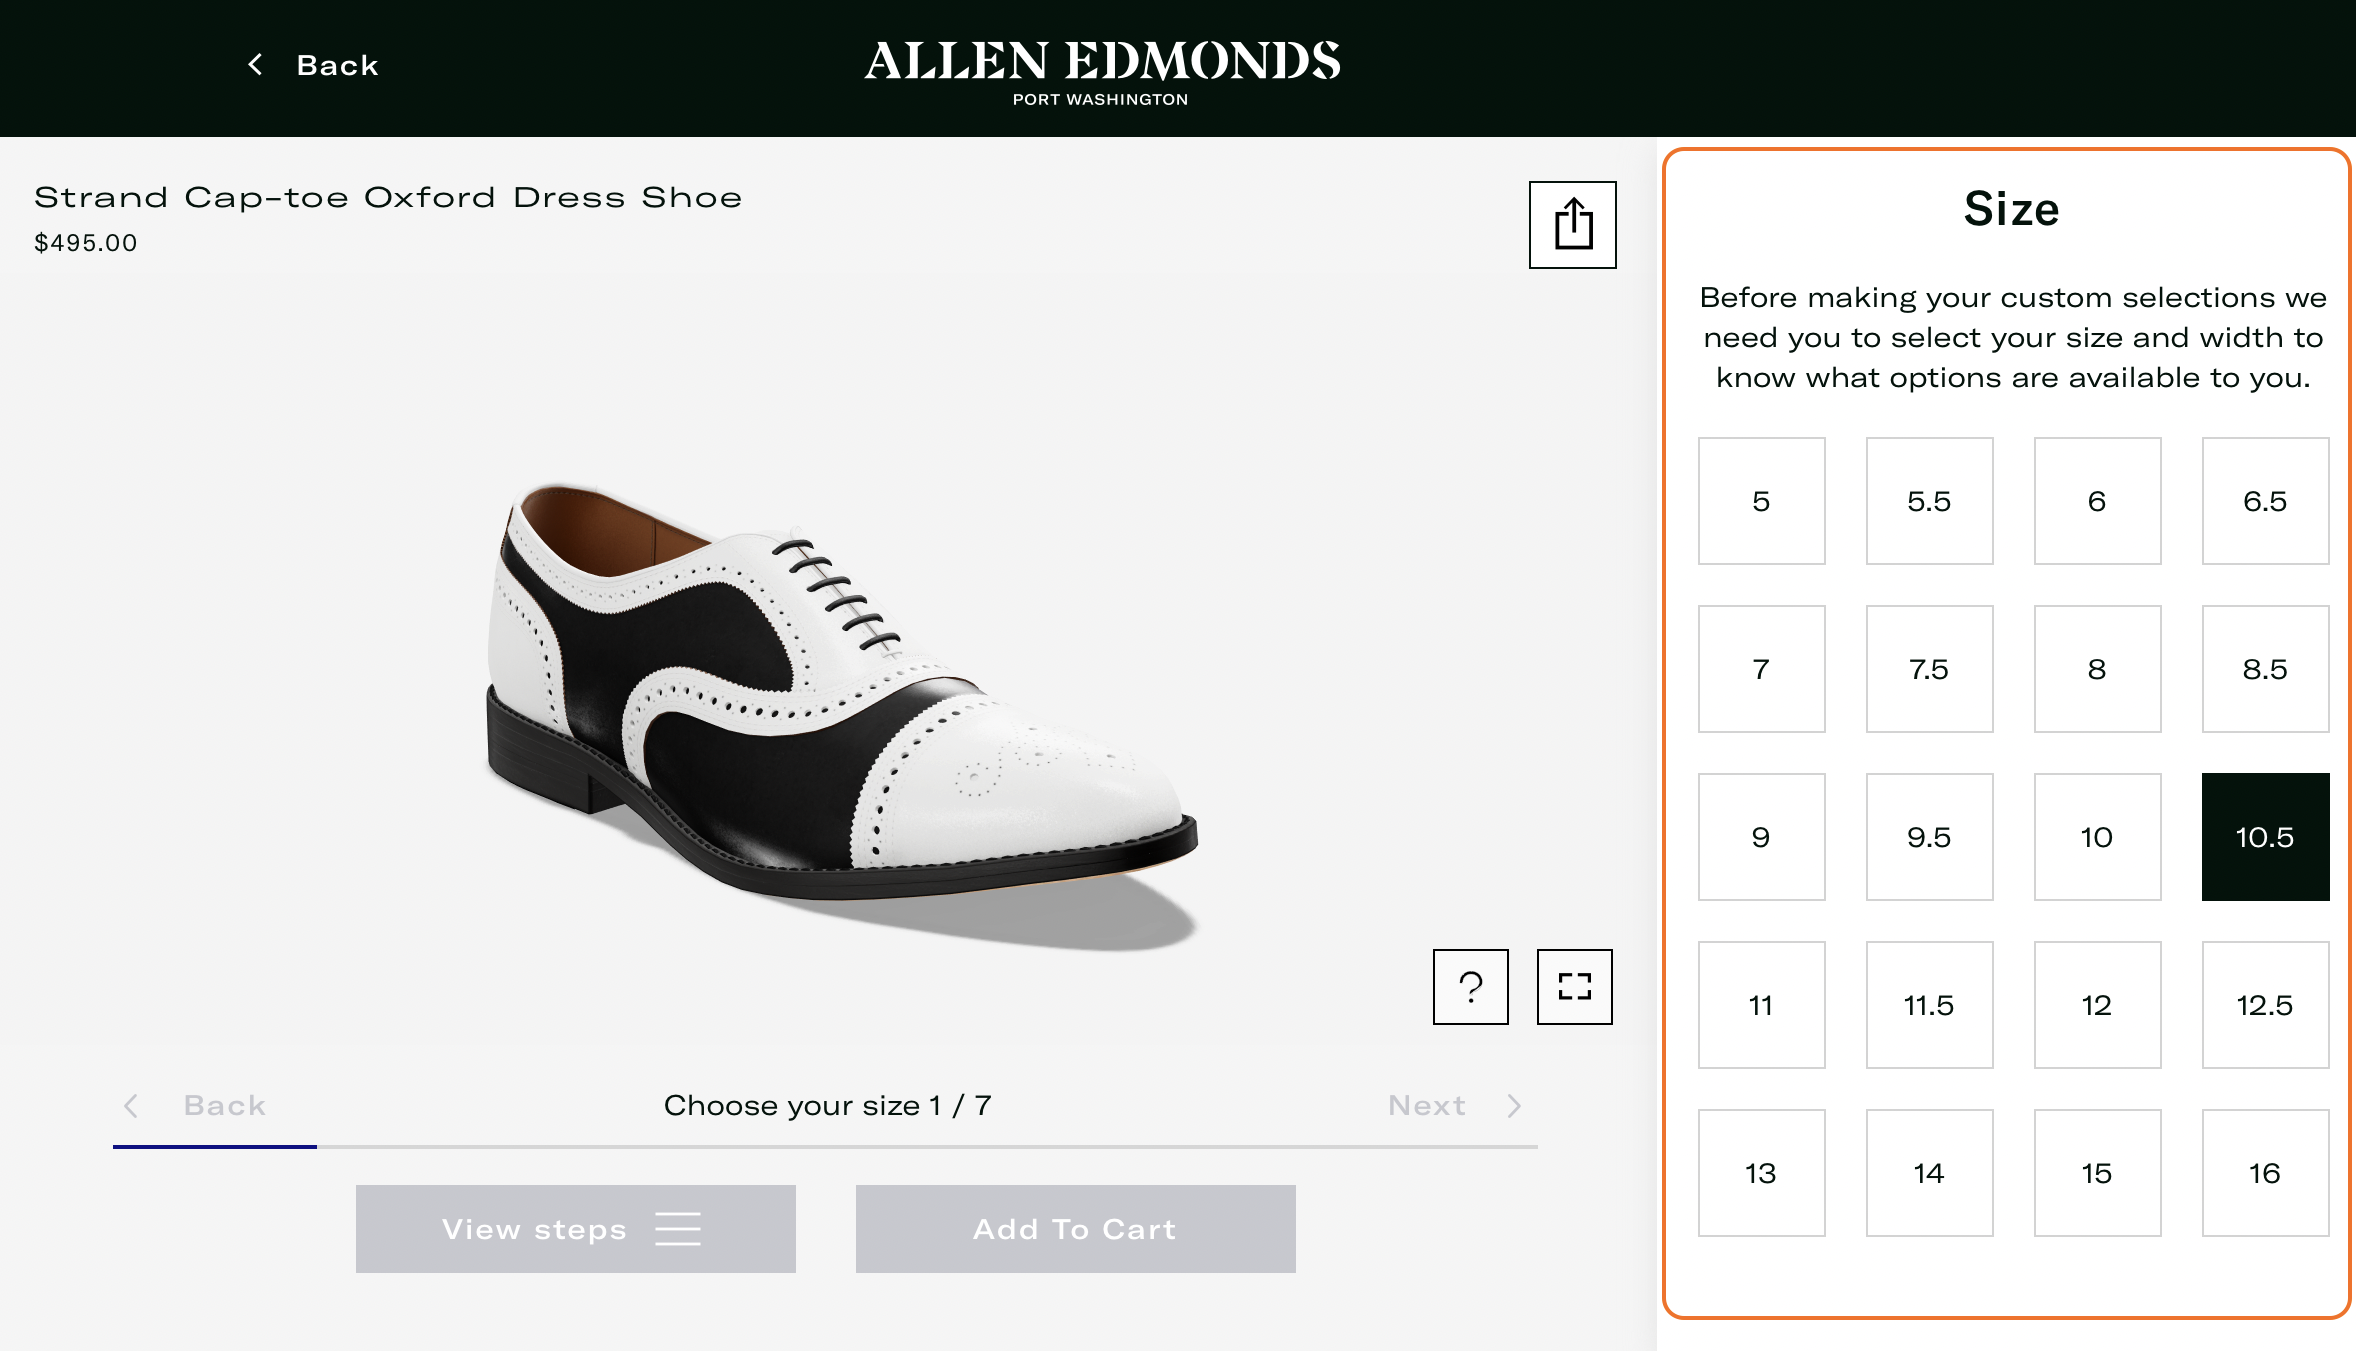 Allen Edmonds Alpha High Top Sneakers - Unboxing and First Look - YouTube